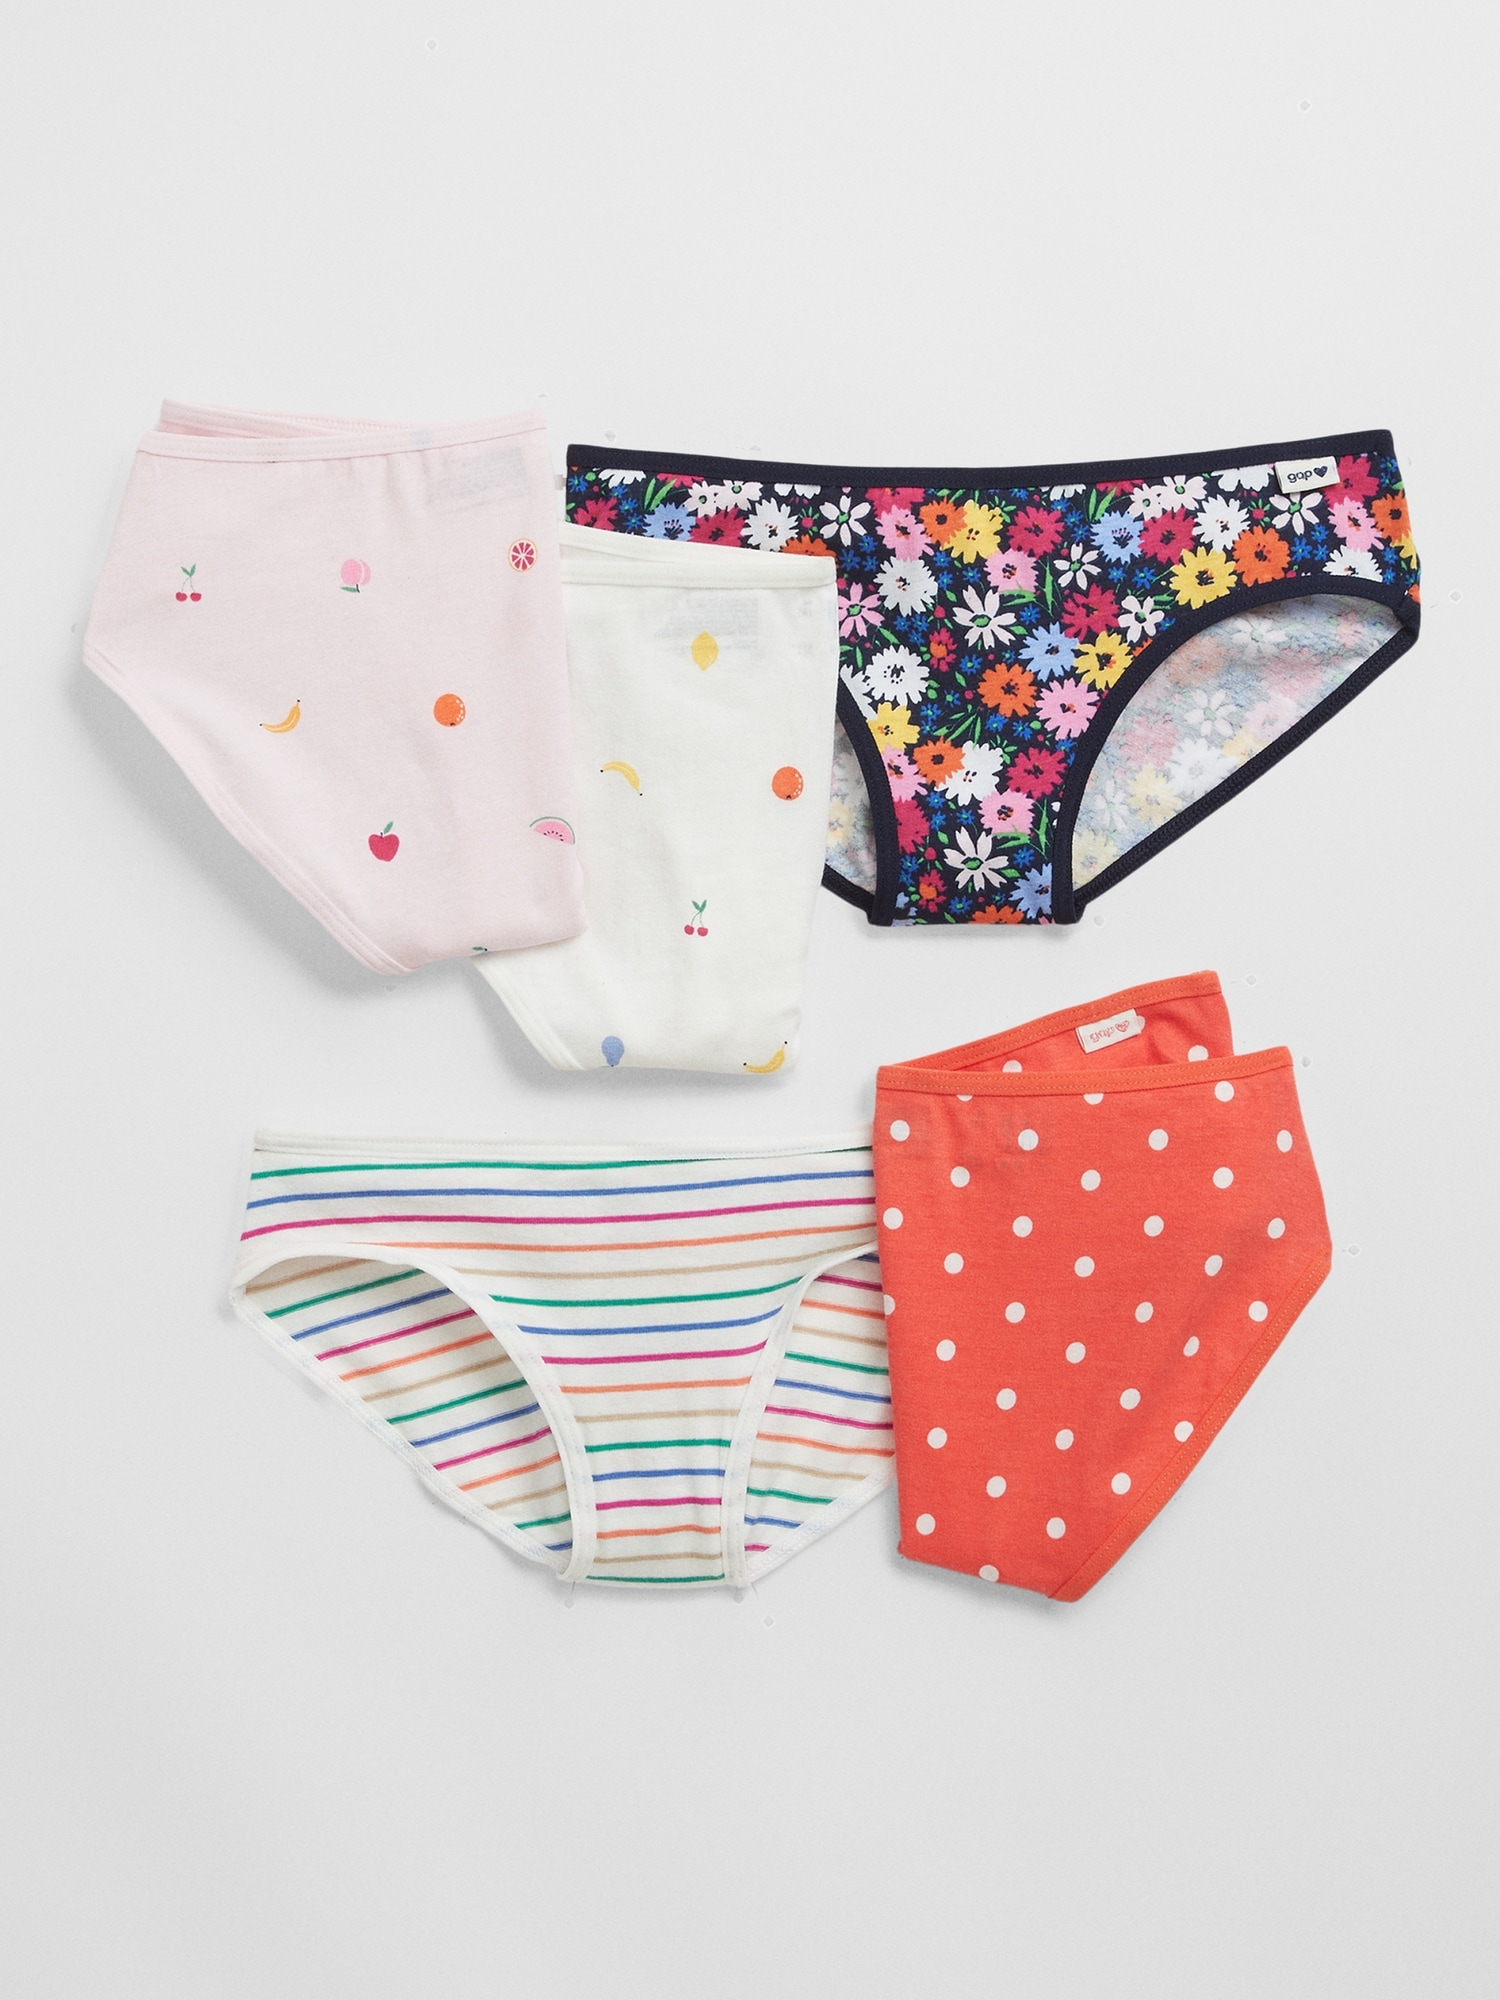  Packs Of 6 Little Girls Panties Multi Color Polka Dot Underwear  Size 5